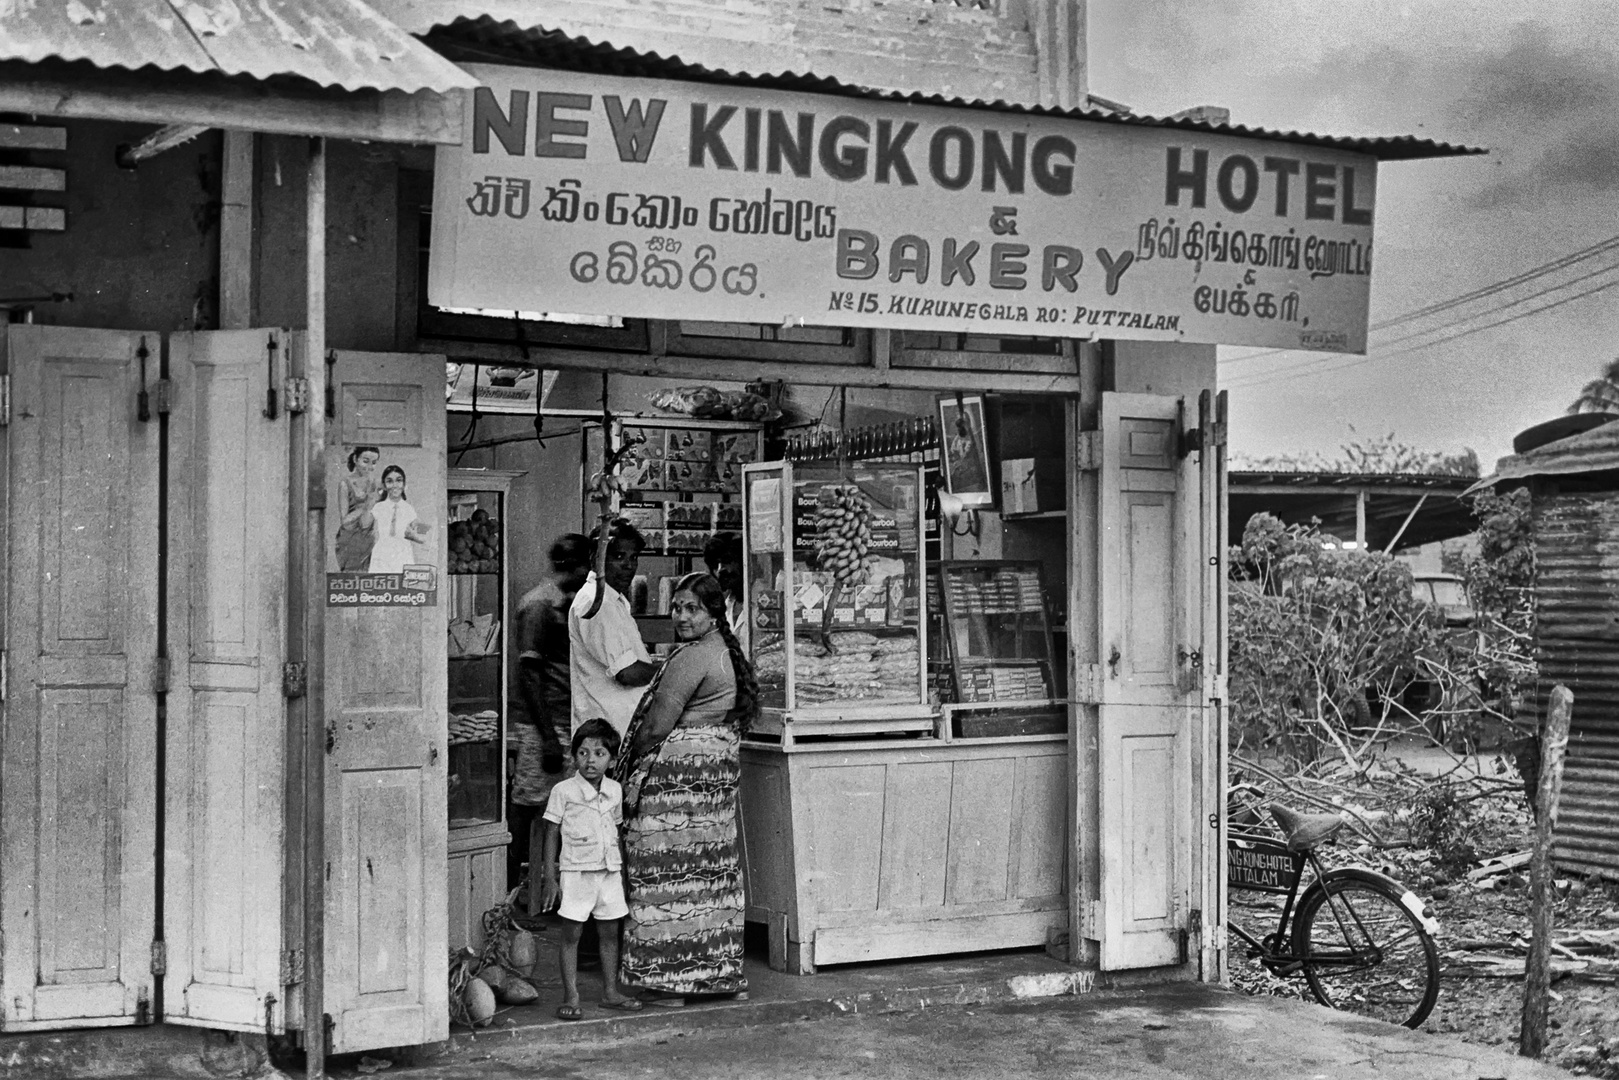 Sri Lanka 79, 11 - NEW KINGKONG HOTEL